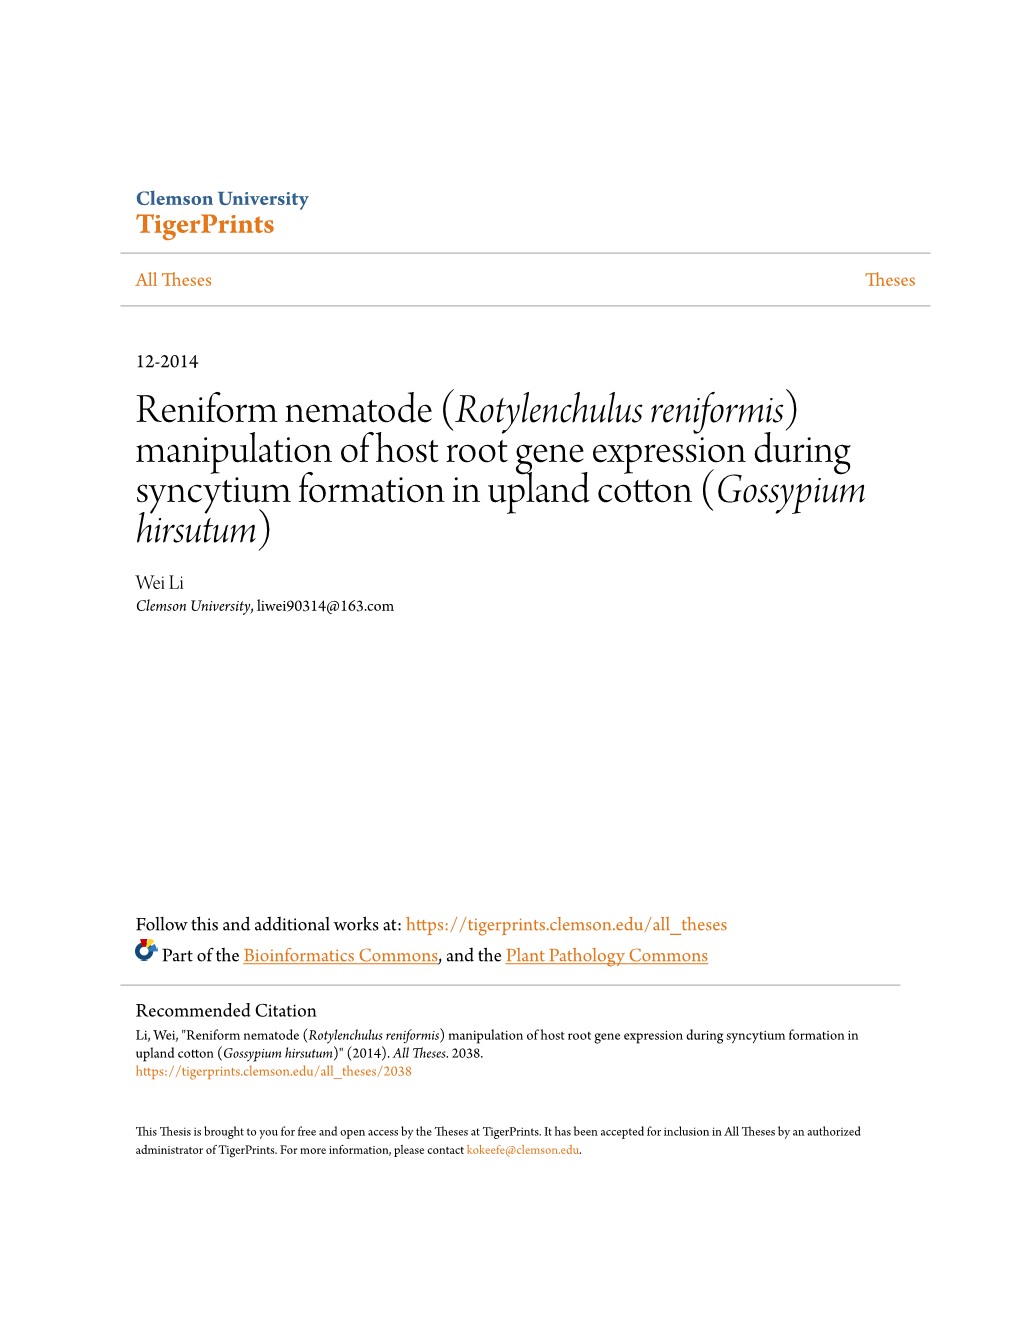 Reniform Nematode (&lt;I&gt;Rotylenchulus